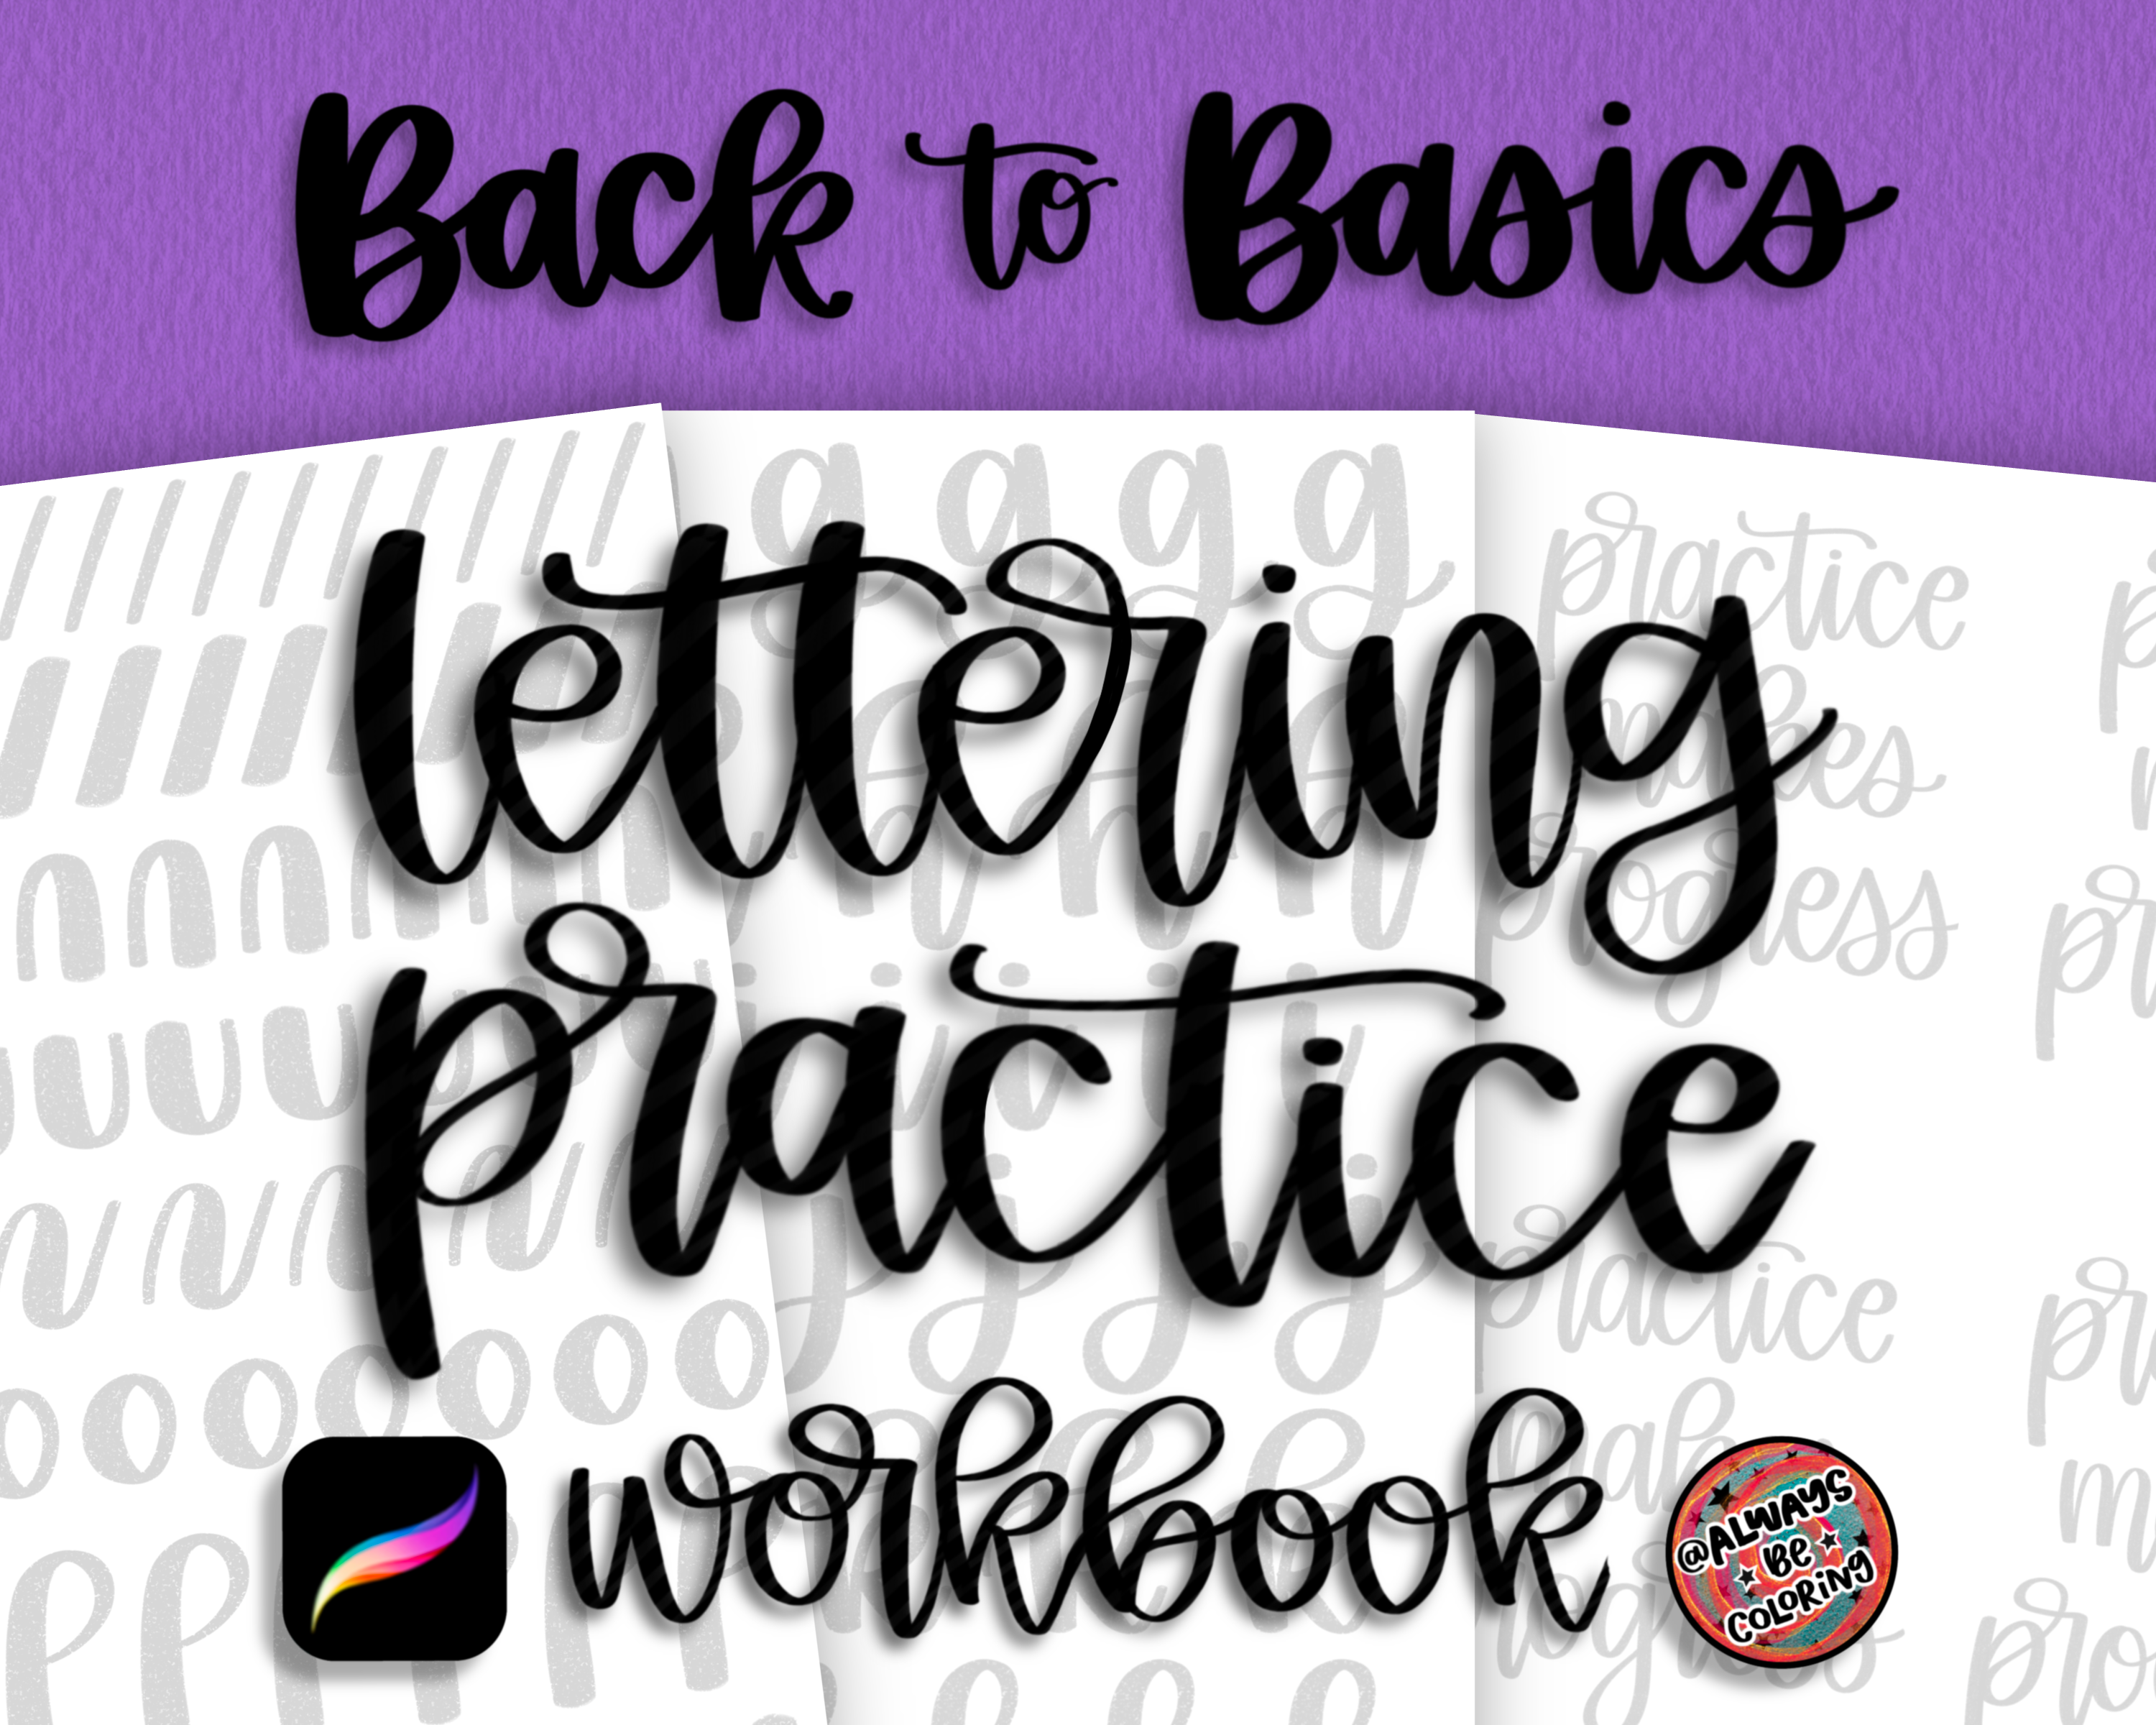 Back to Basics Lettering Workbook